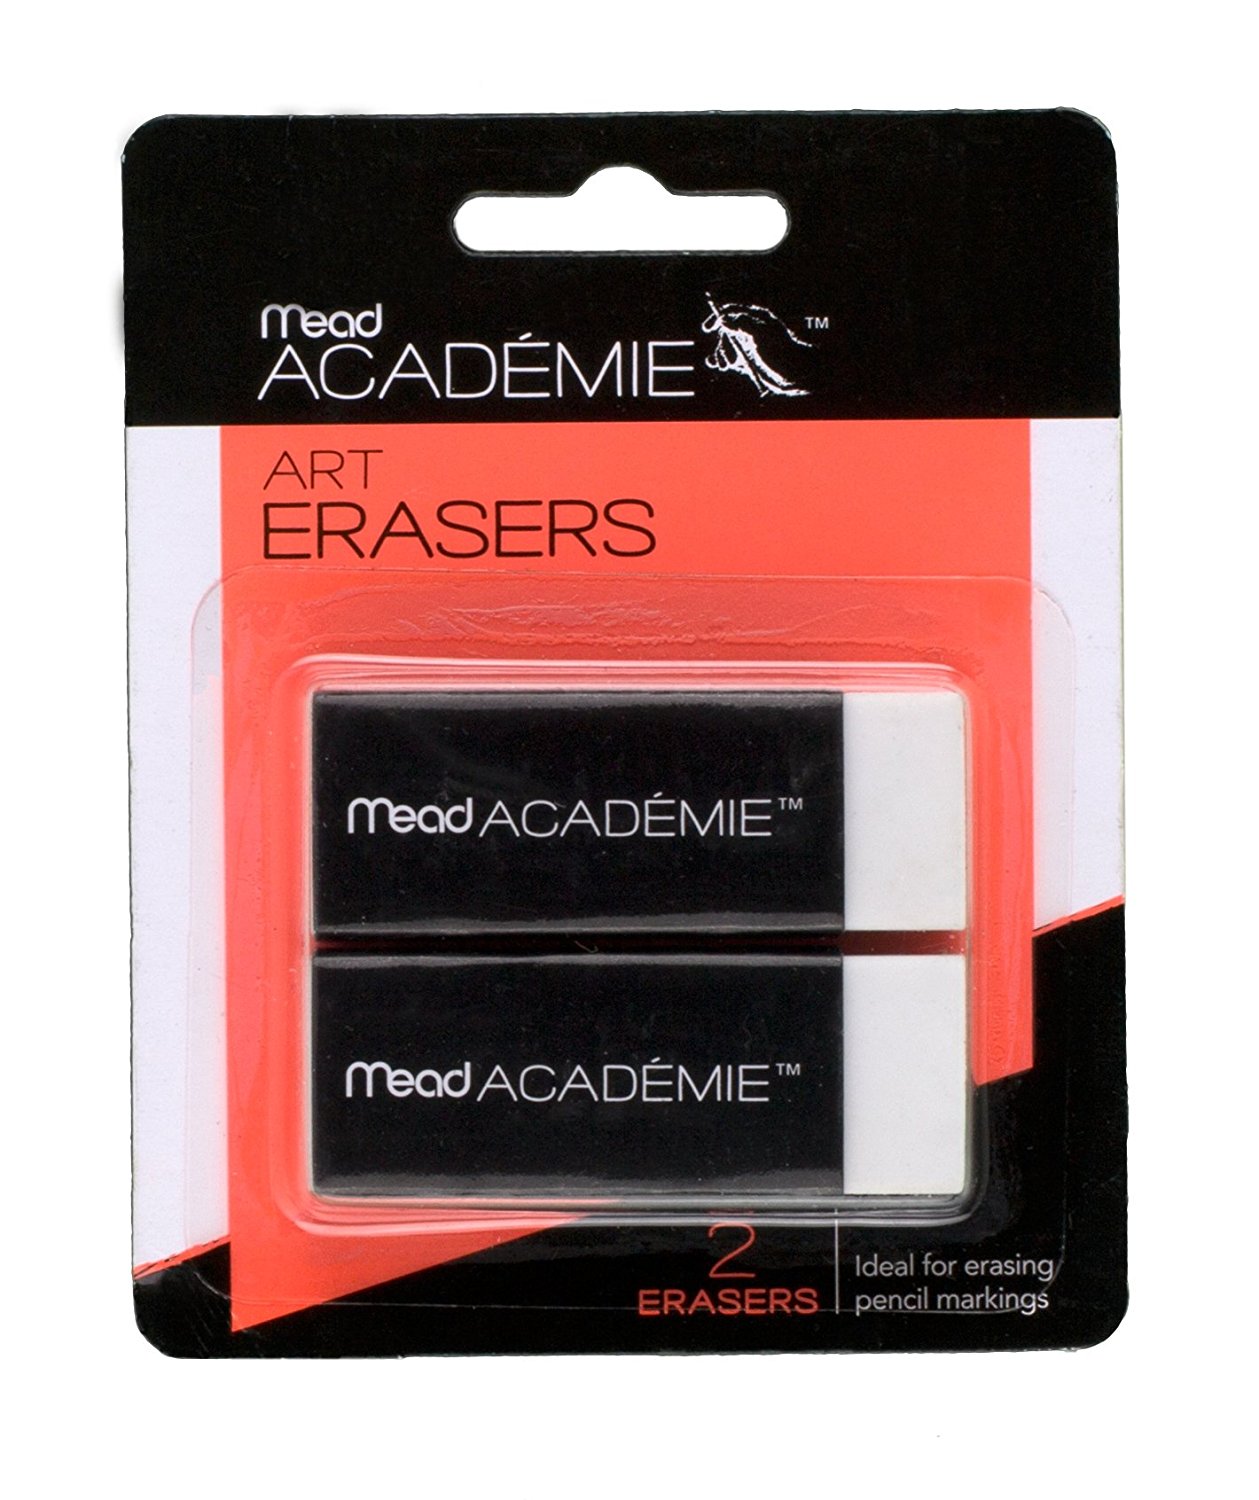 Mead Academie Art Erasers - 2 Pack - Art Supplies